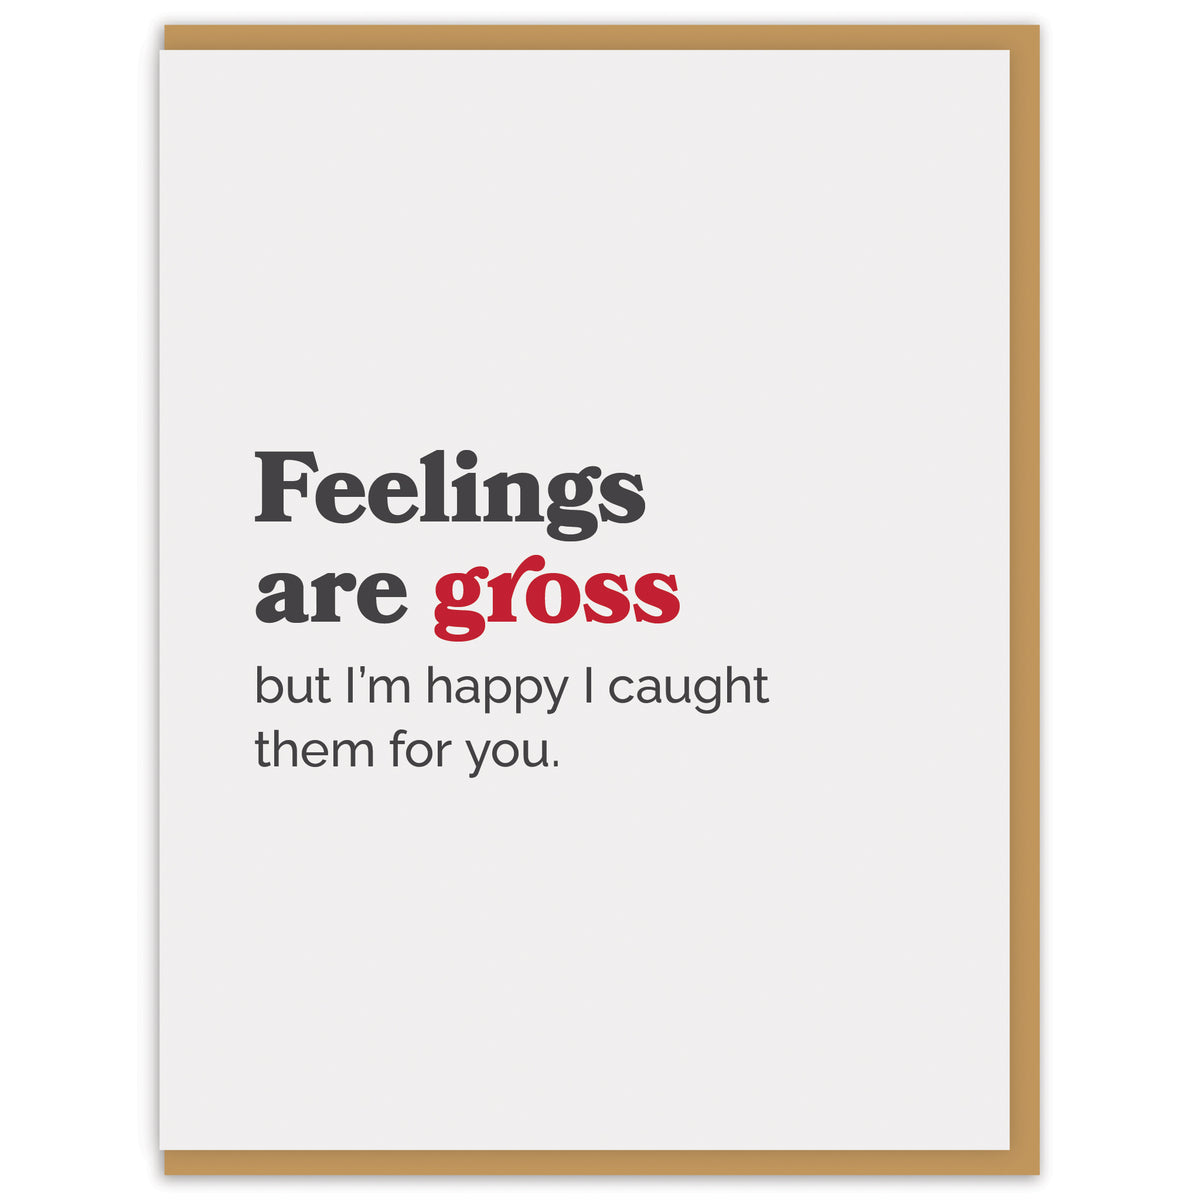 Feelings are gross